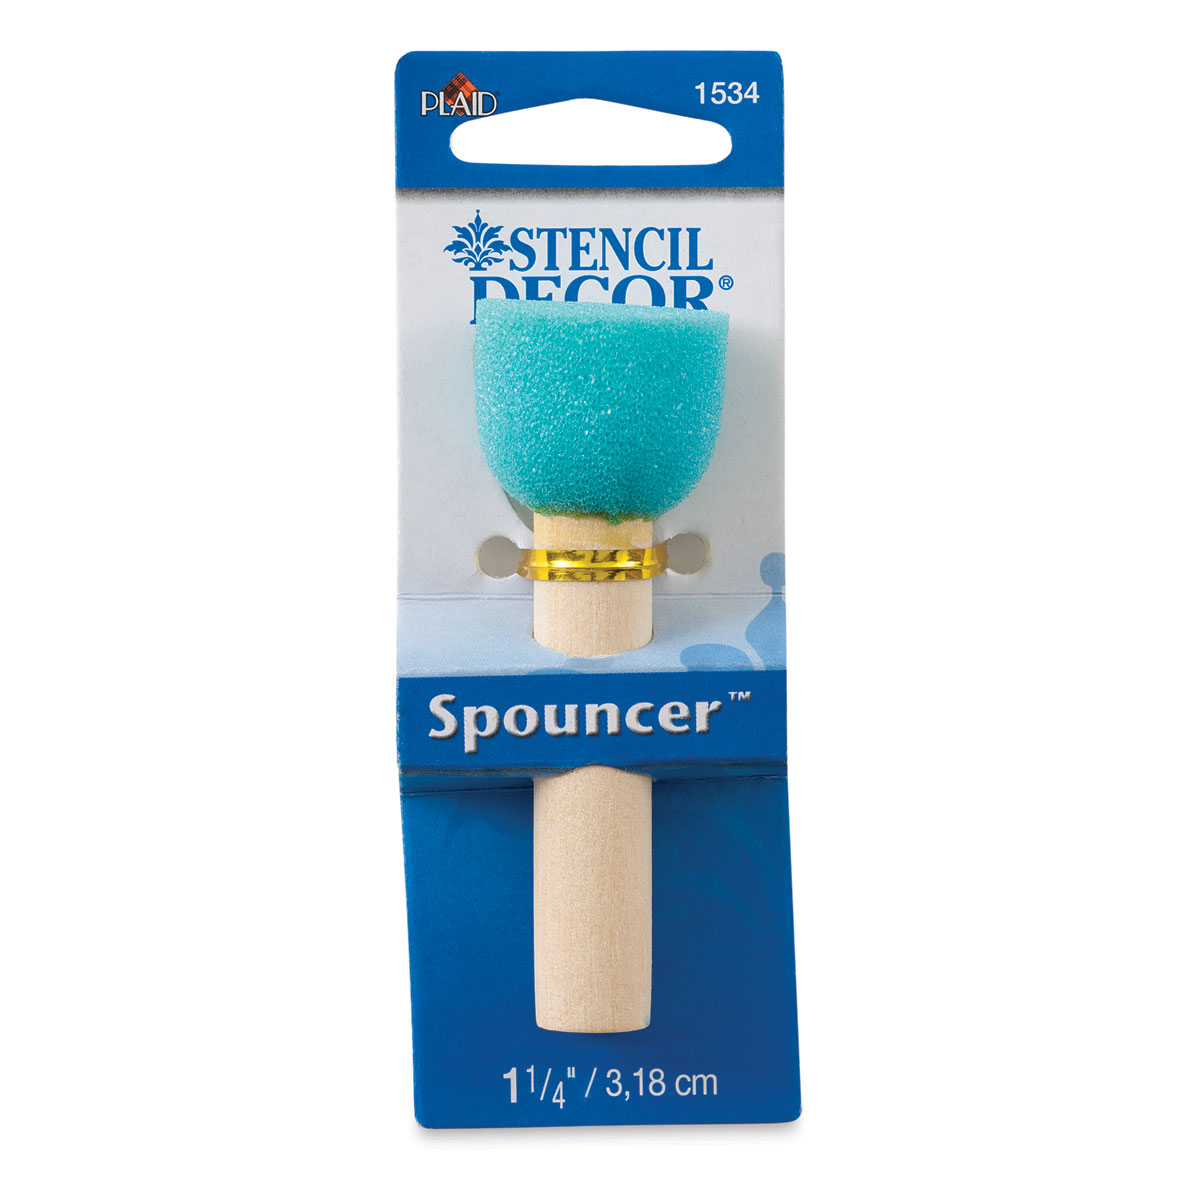 4 Inch Foam Paint Brushes Bevel Edge with Plastic Handle Sponge Brush 2Pcs